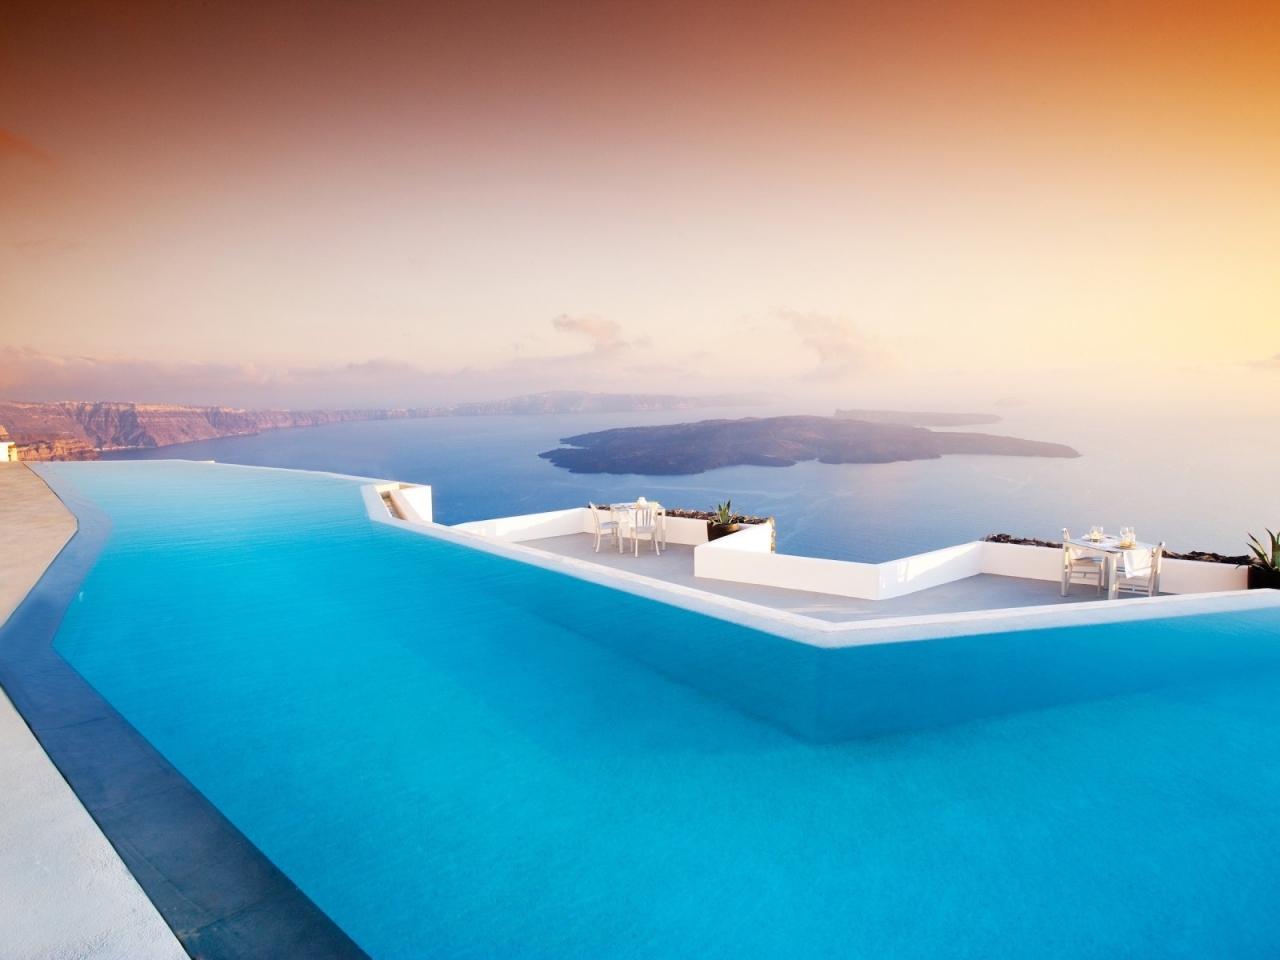 Santorini Pool for 1280 x 960 resolution